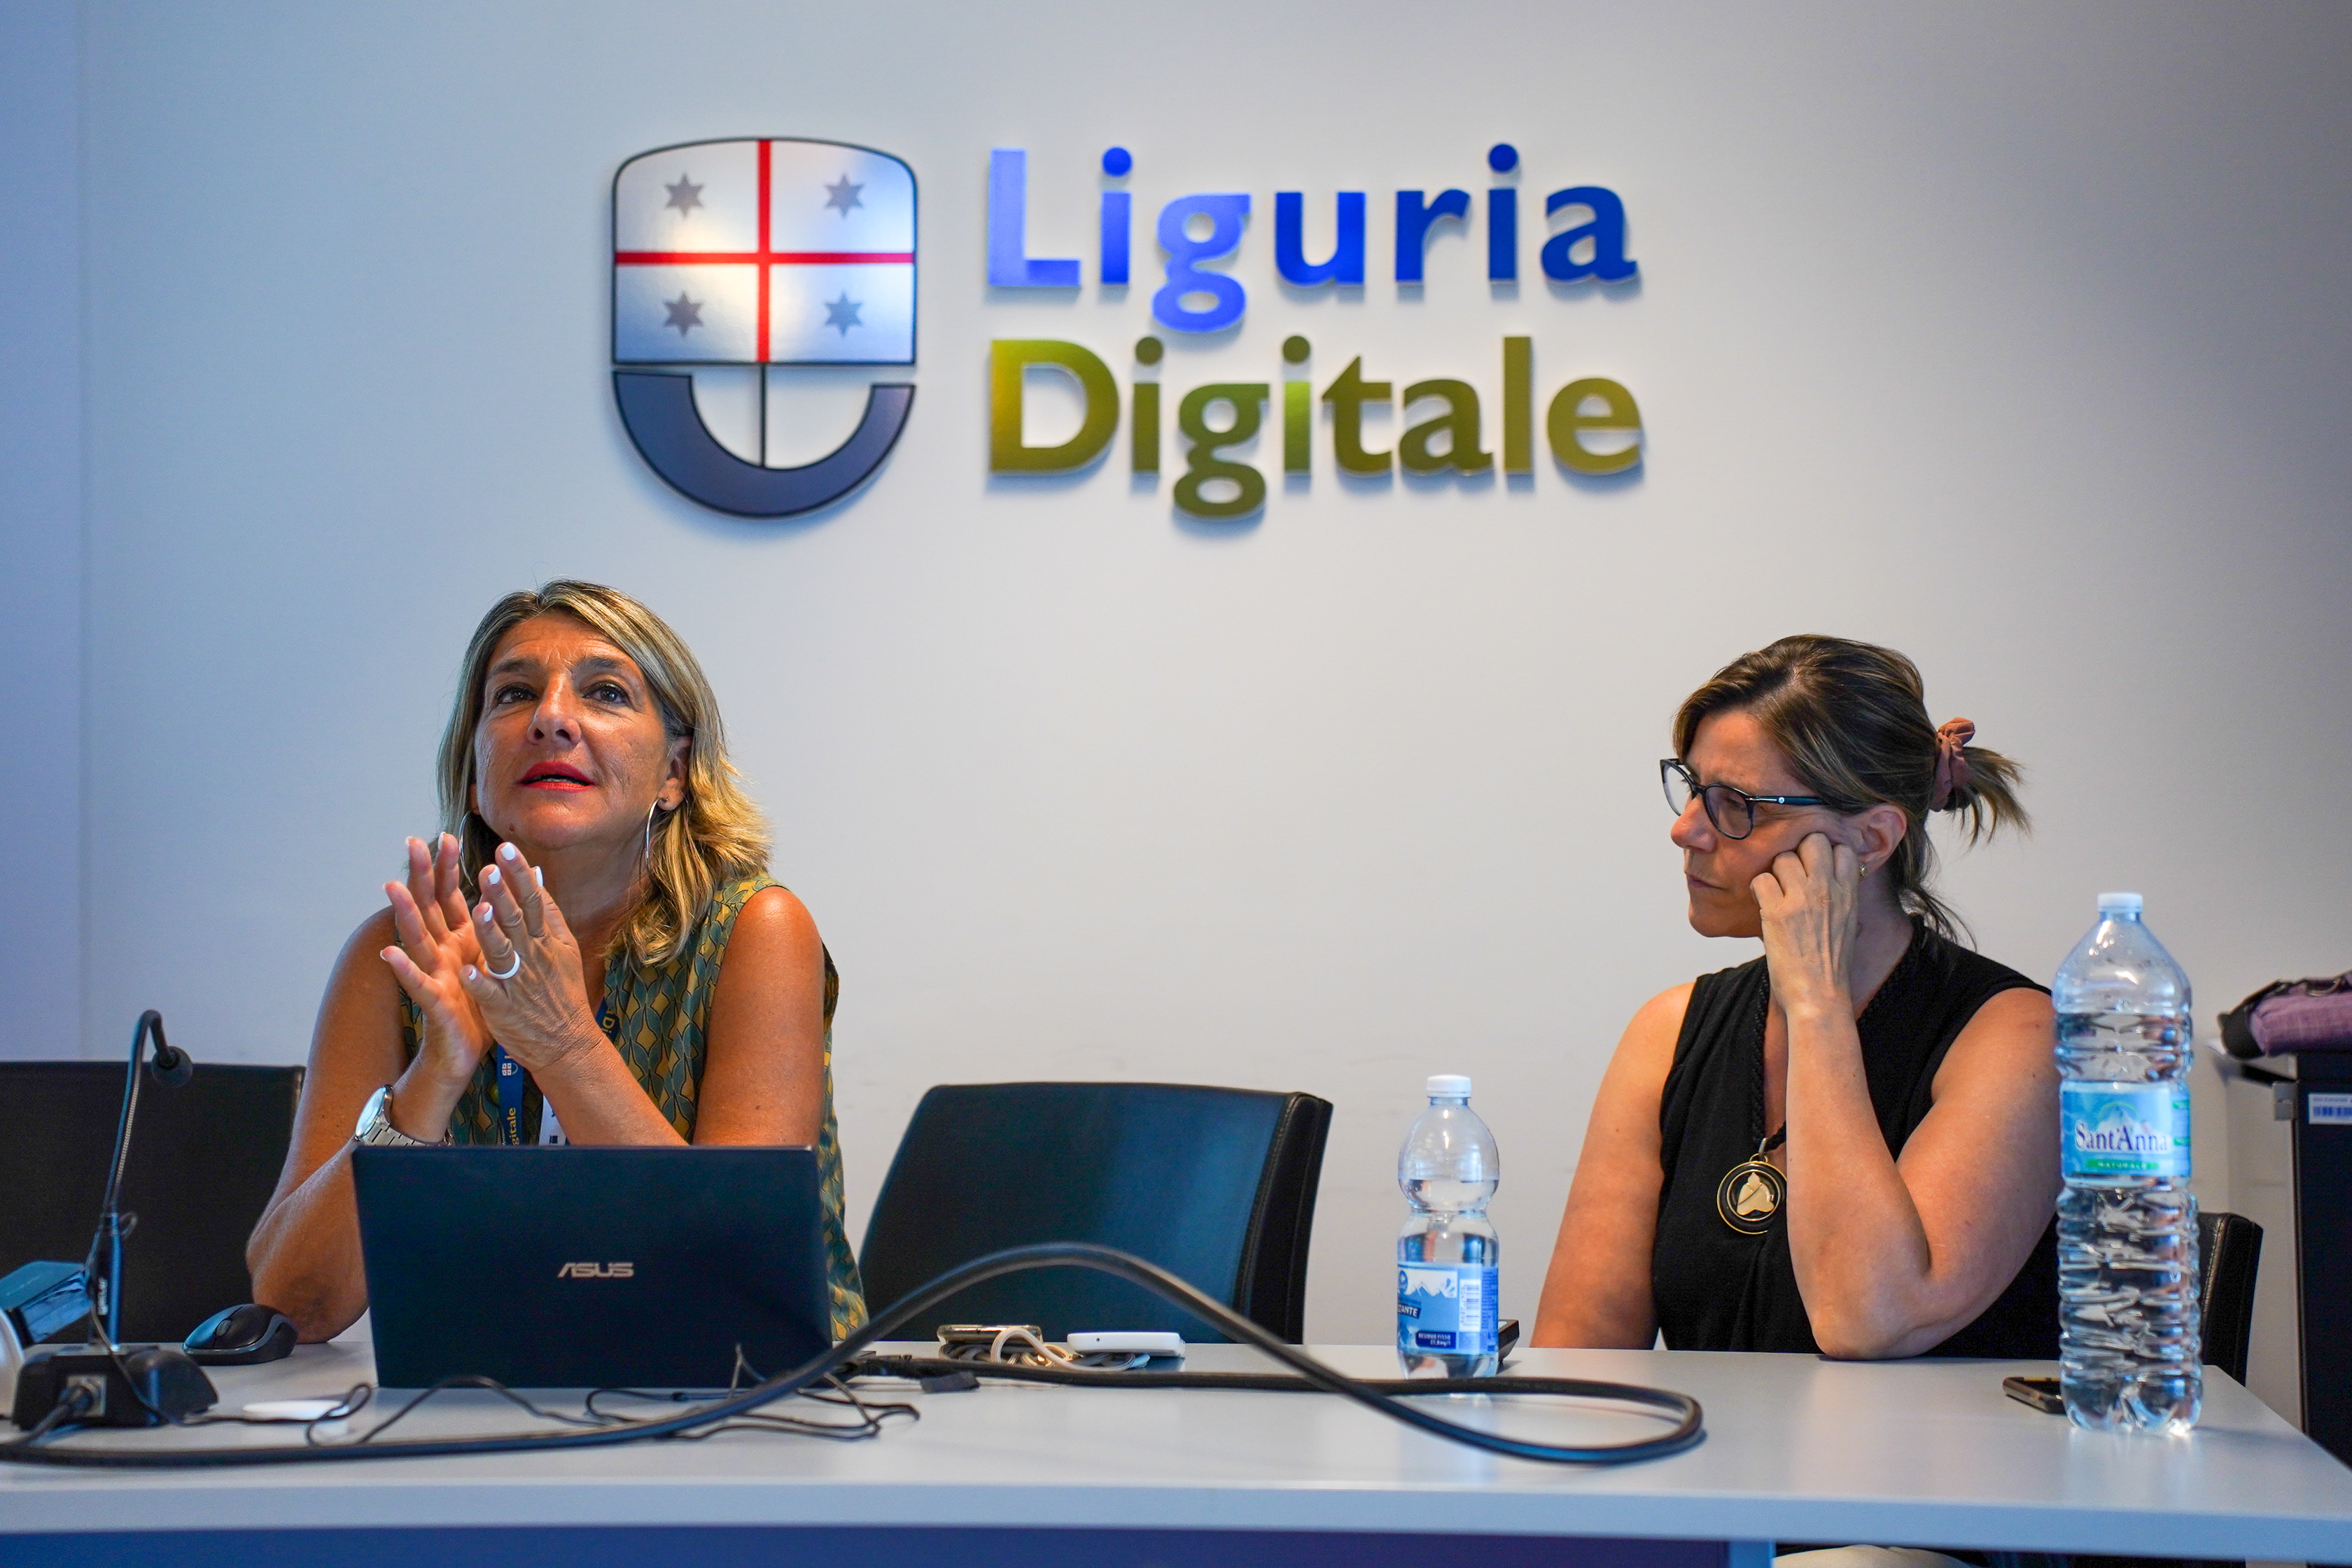 Team Scuola Digitale Liguria